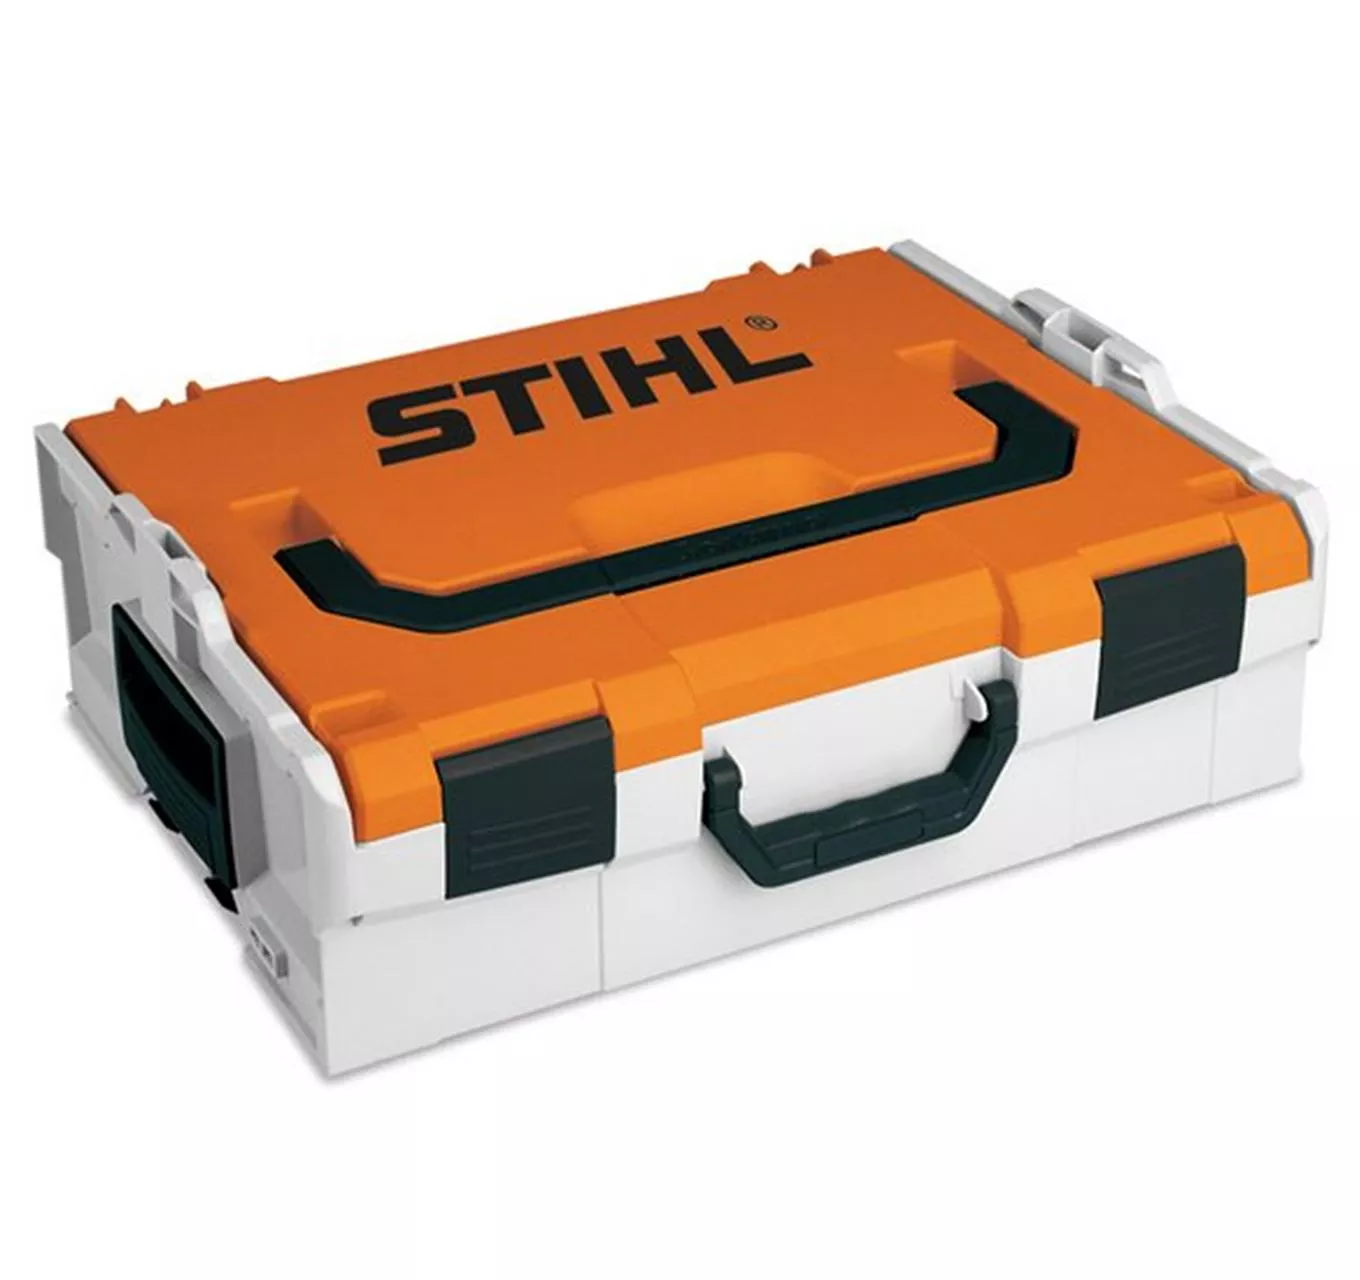 Battery Storage Box - Standard